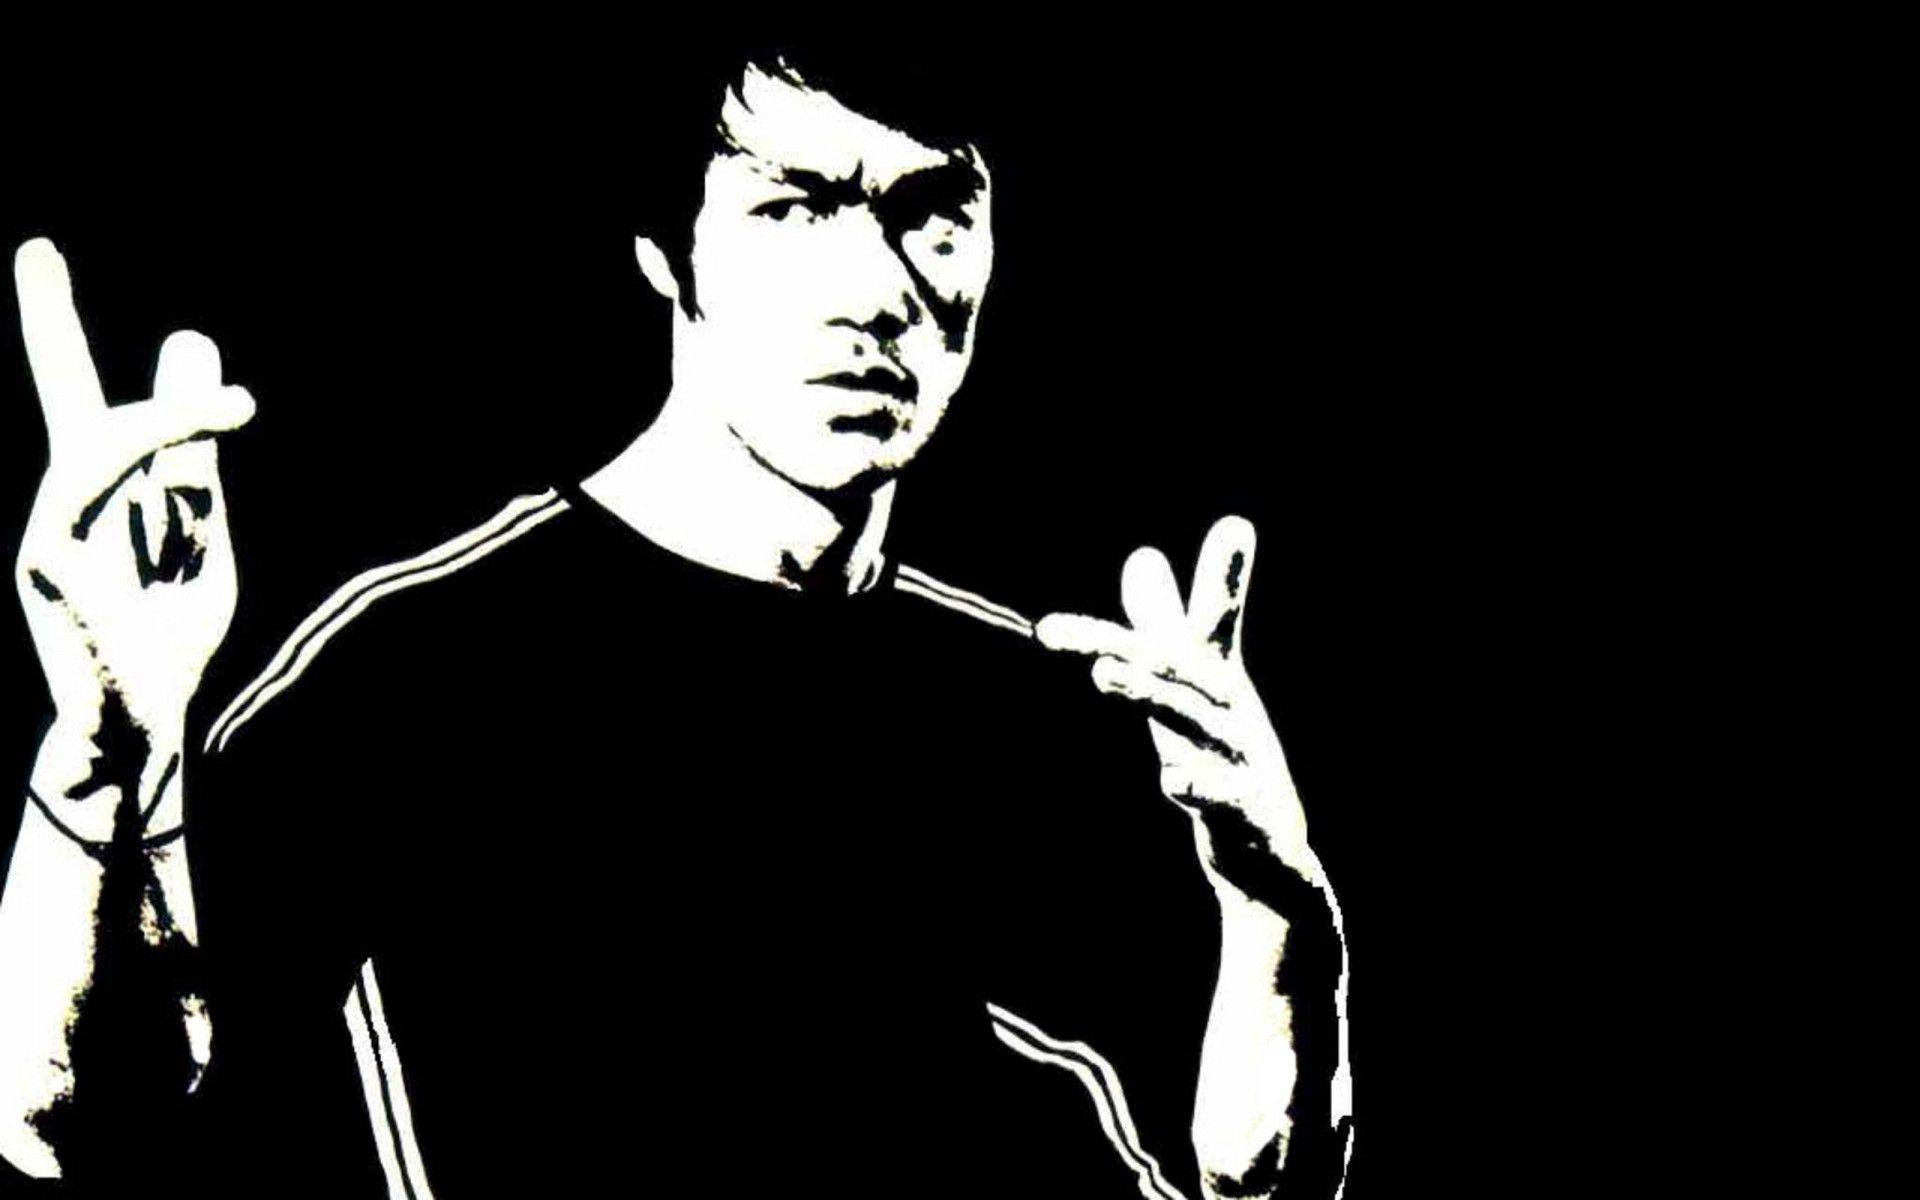 Bruce Lee Wallpapers Wallpaper Cave